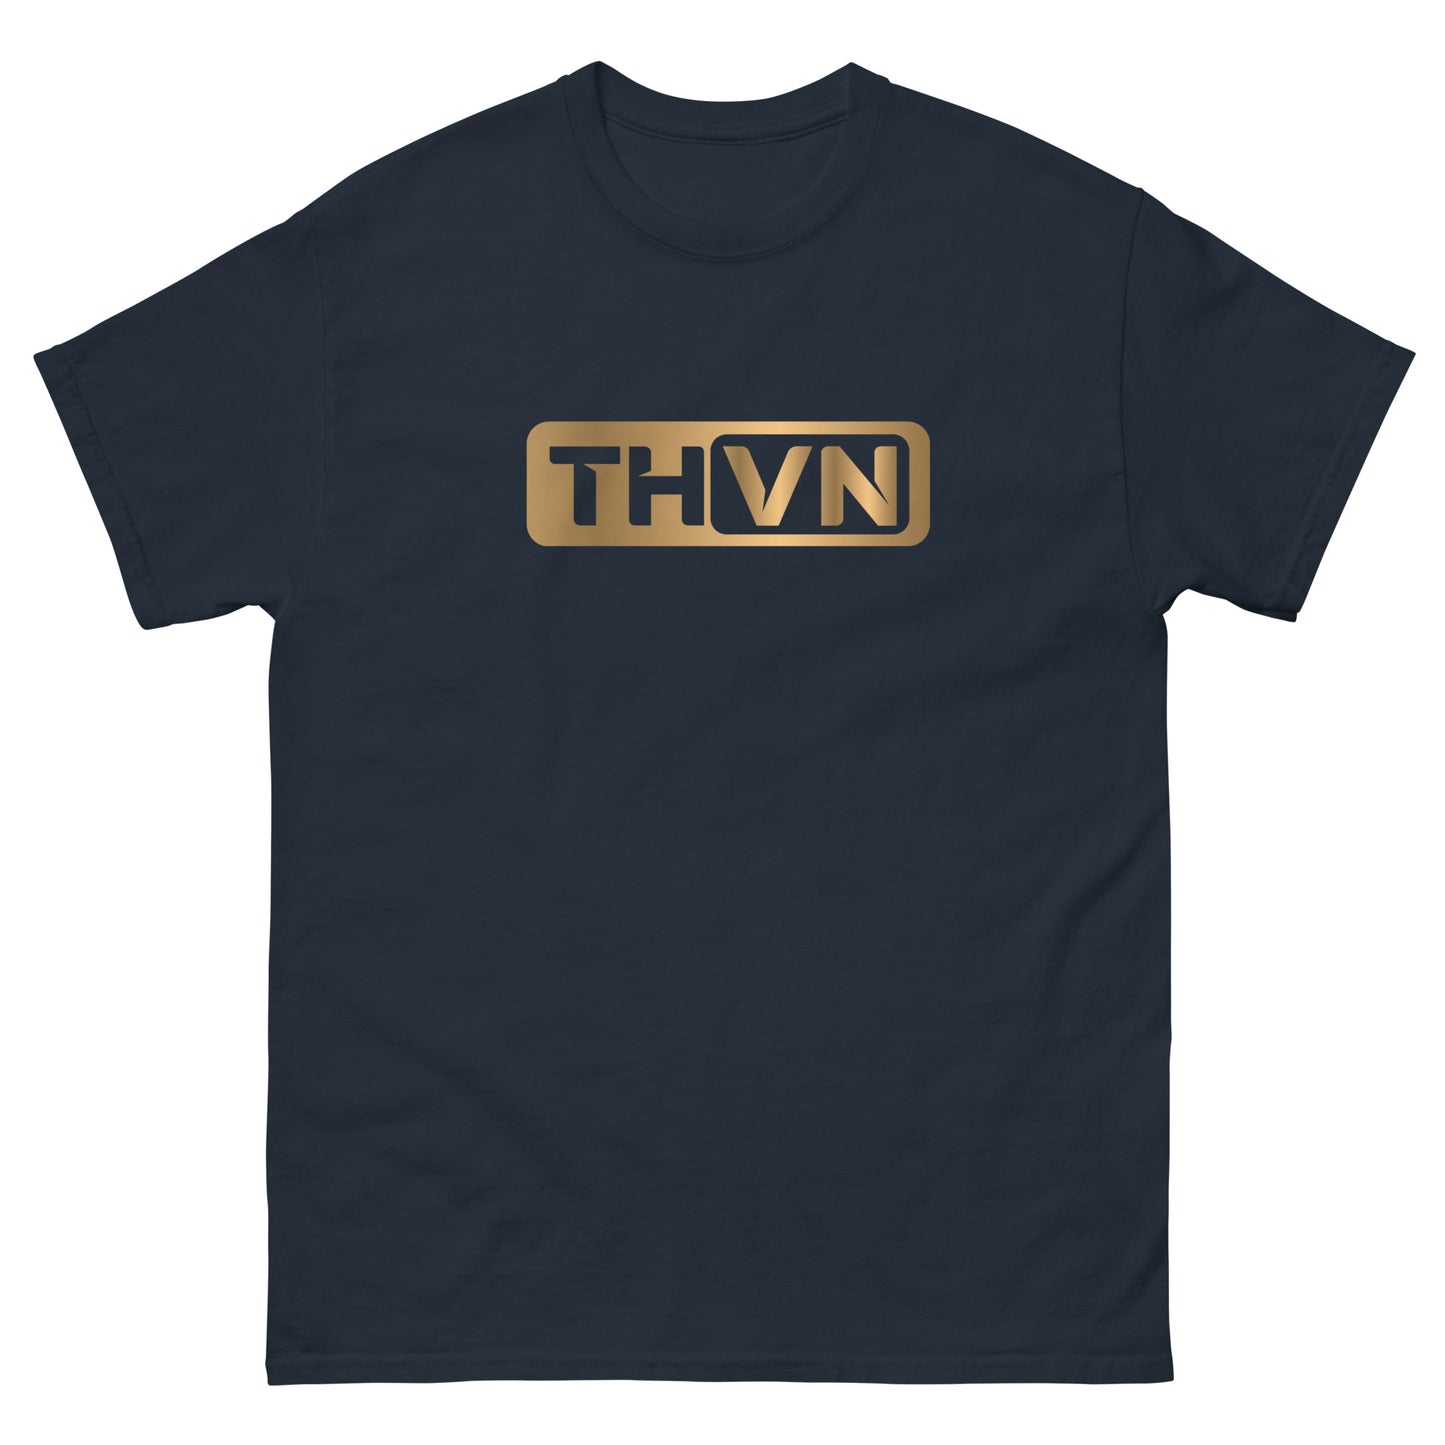 The High Value Nurse Official "THVN" Logo T-Shirt